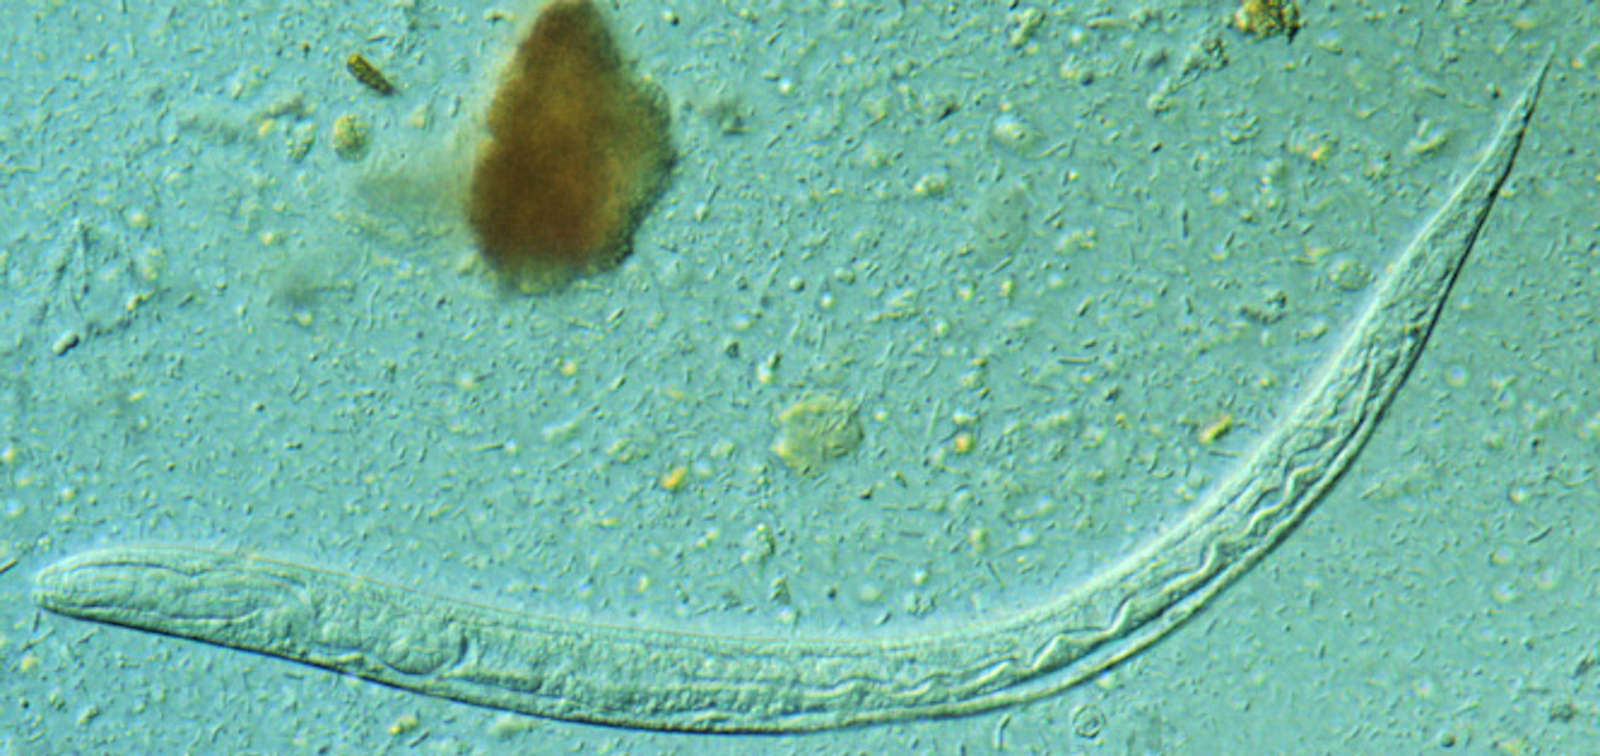 Larva de Strongyloides stercoralis